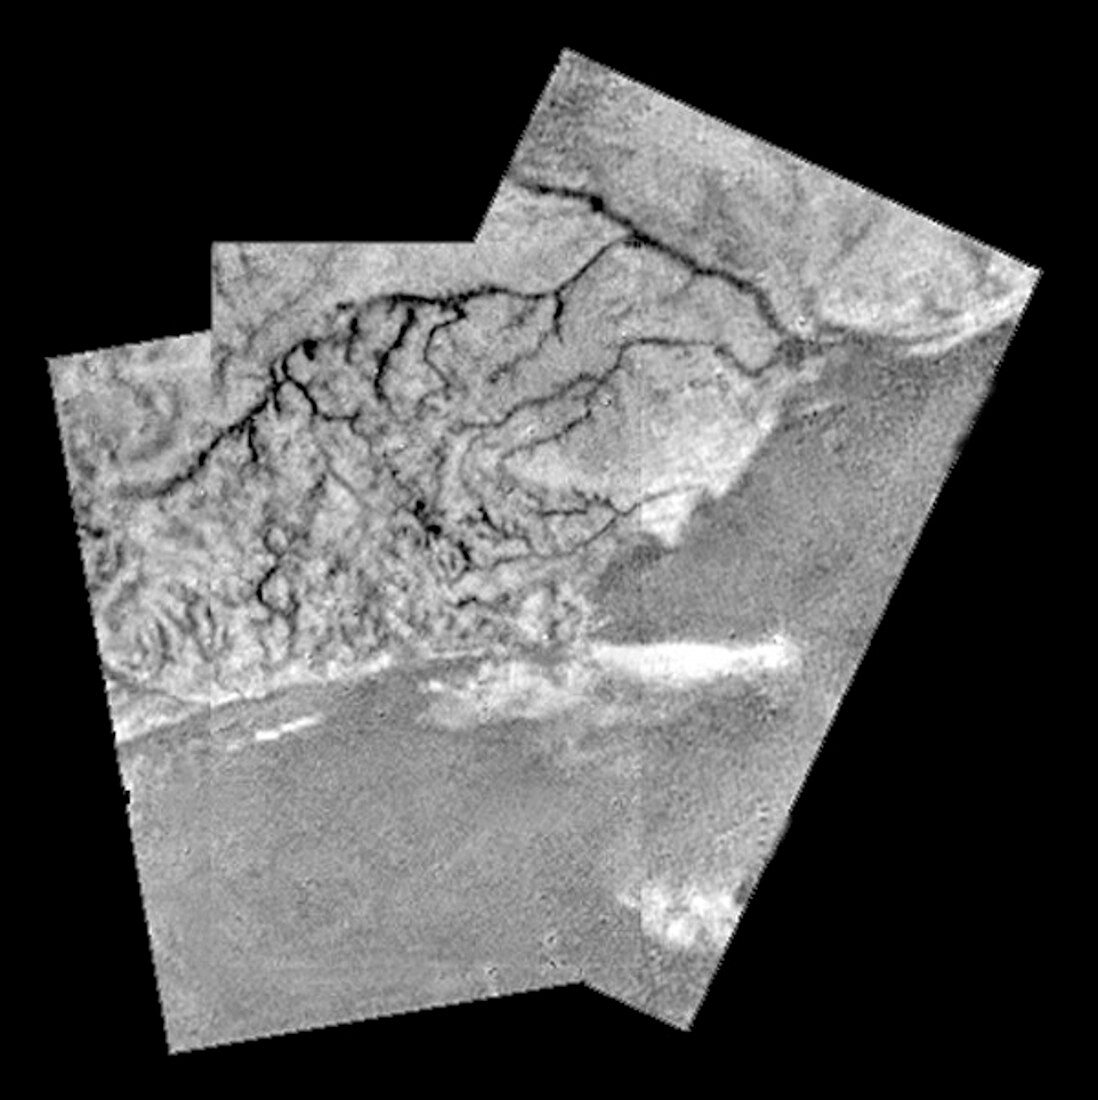 Titan seen from Huygens